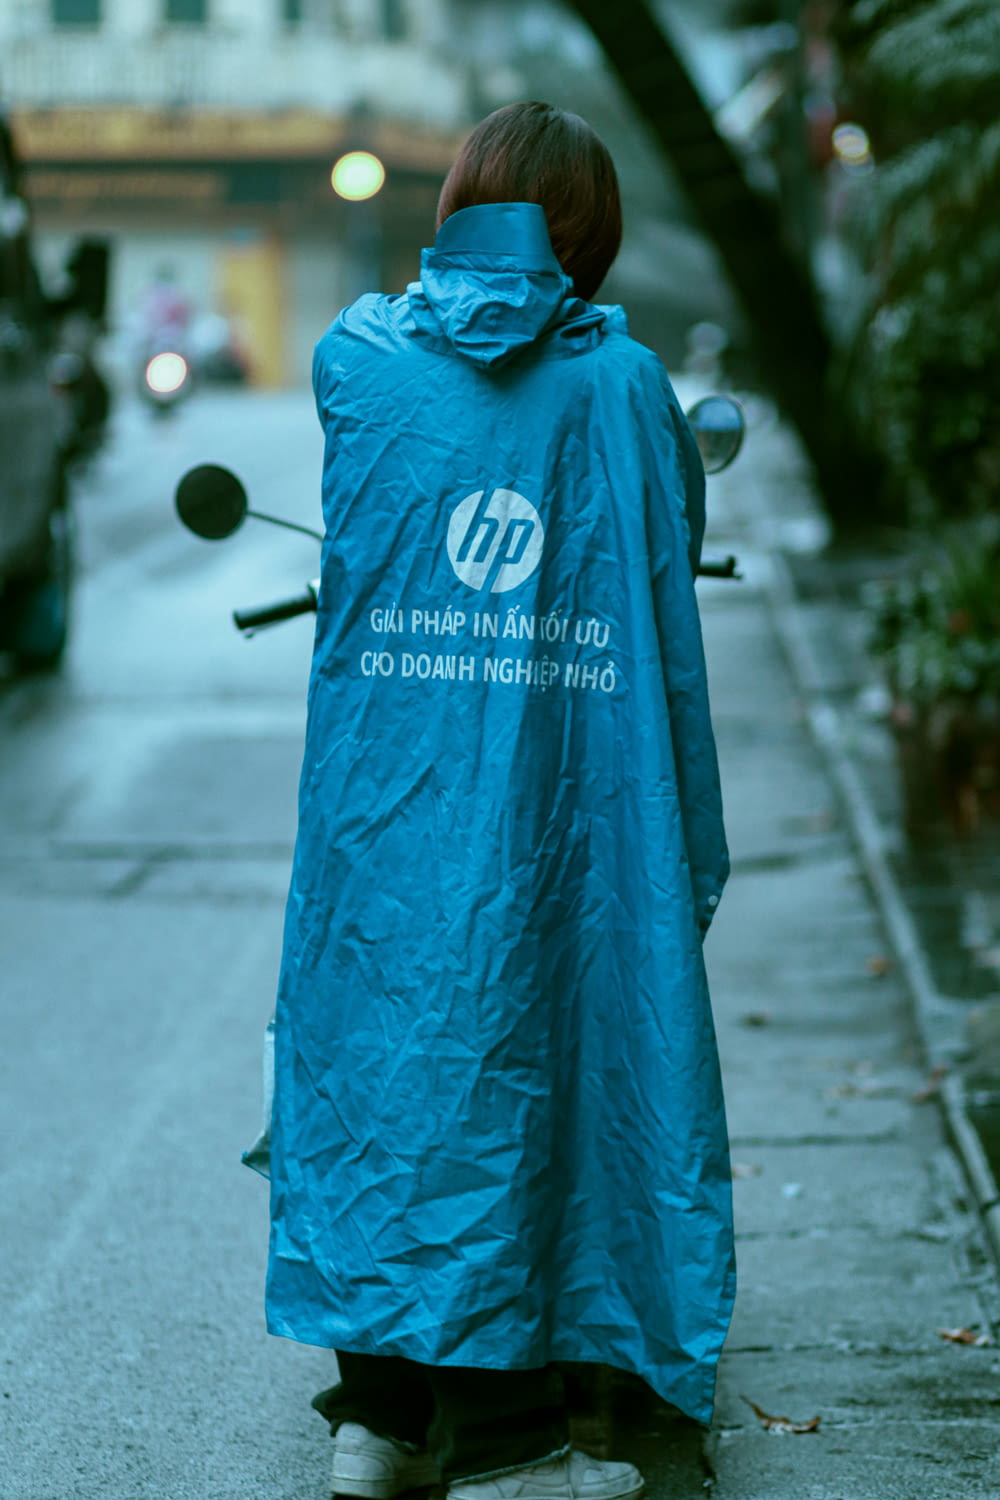 a woman in a blue raincoat is walking down the street